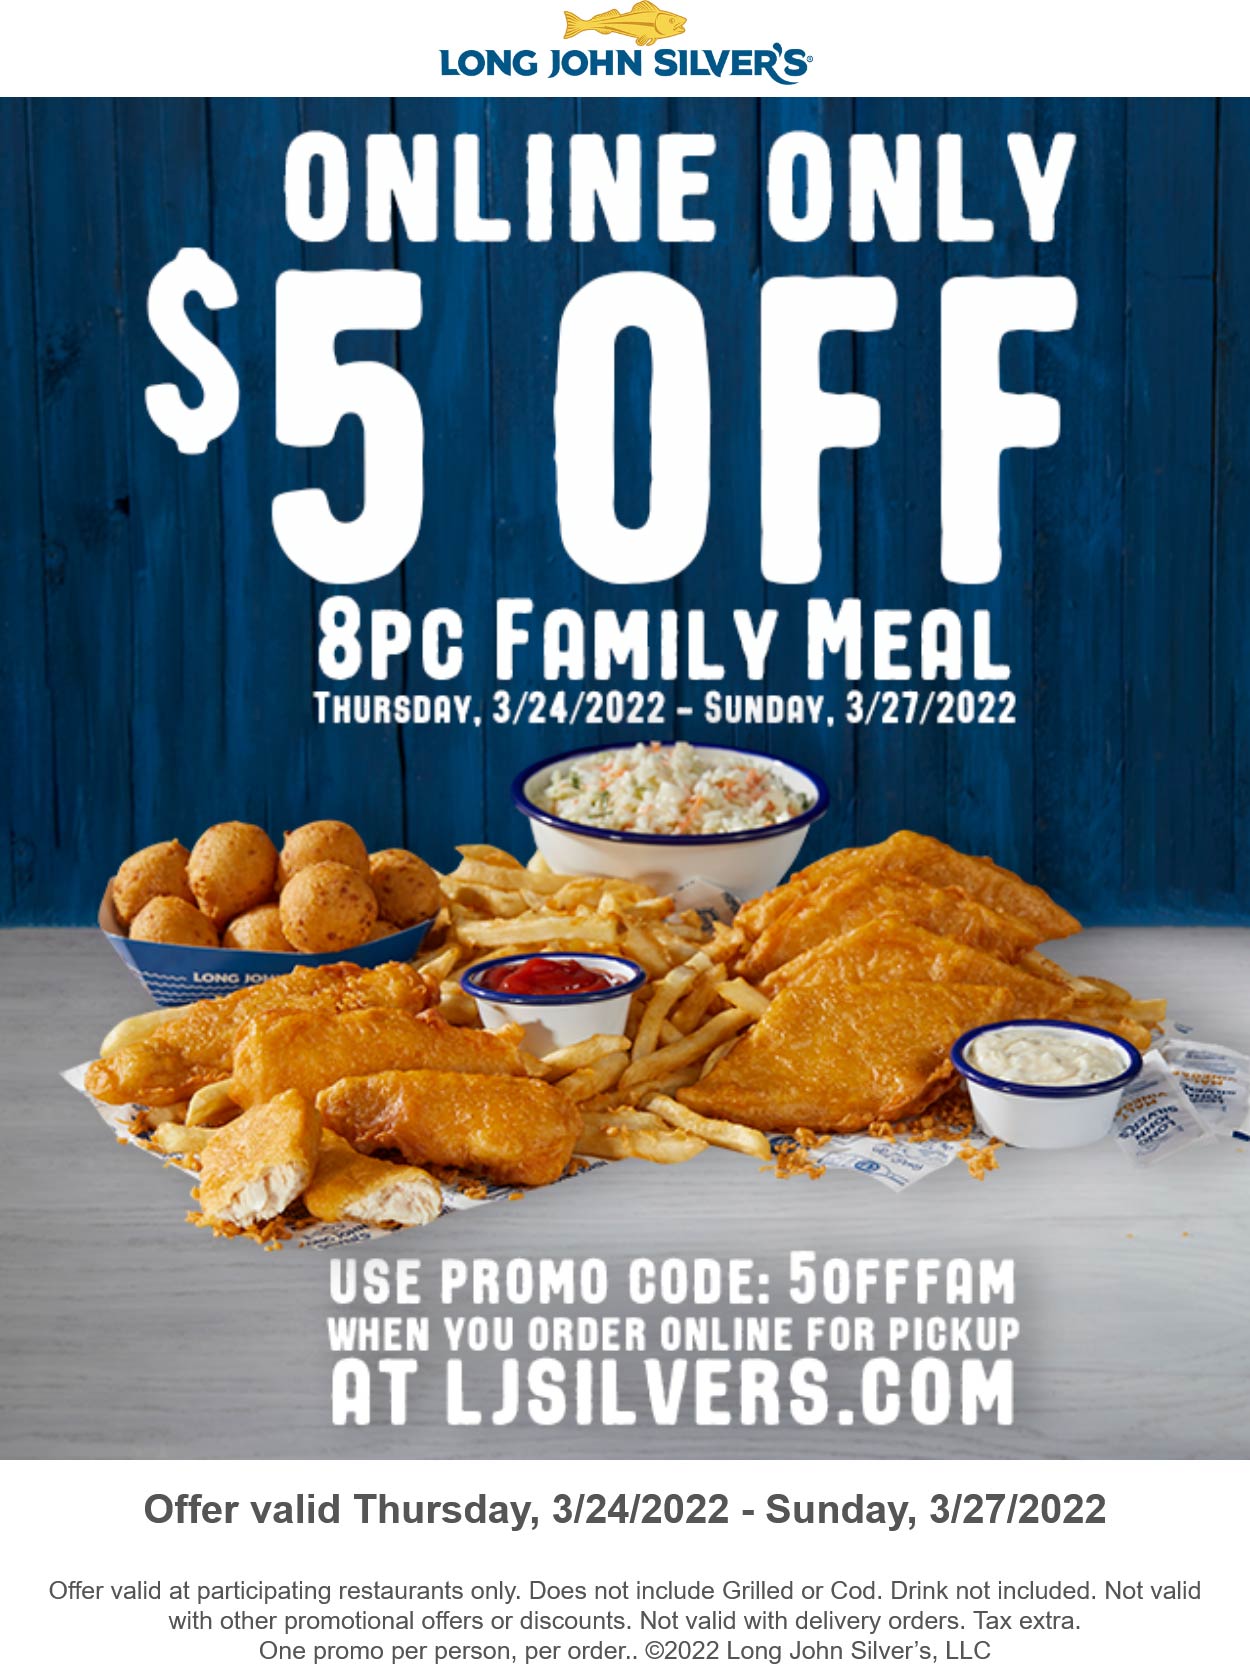 Long John Silvers restaurants Coupon  $5 off family meal at Long John Silvers via promo code 5OFFFAM #longjohnsilvers 